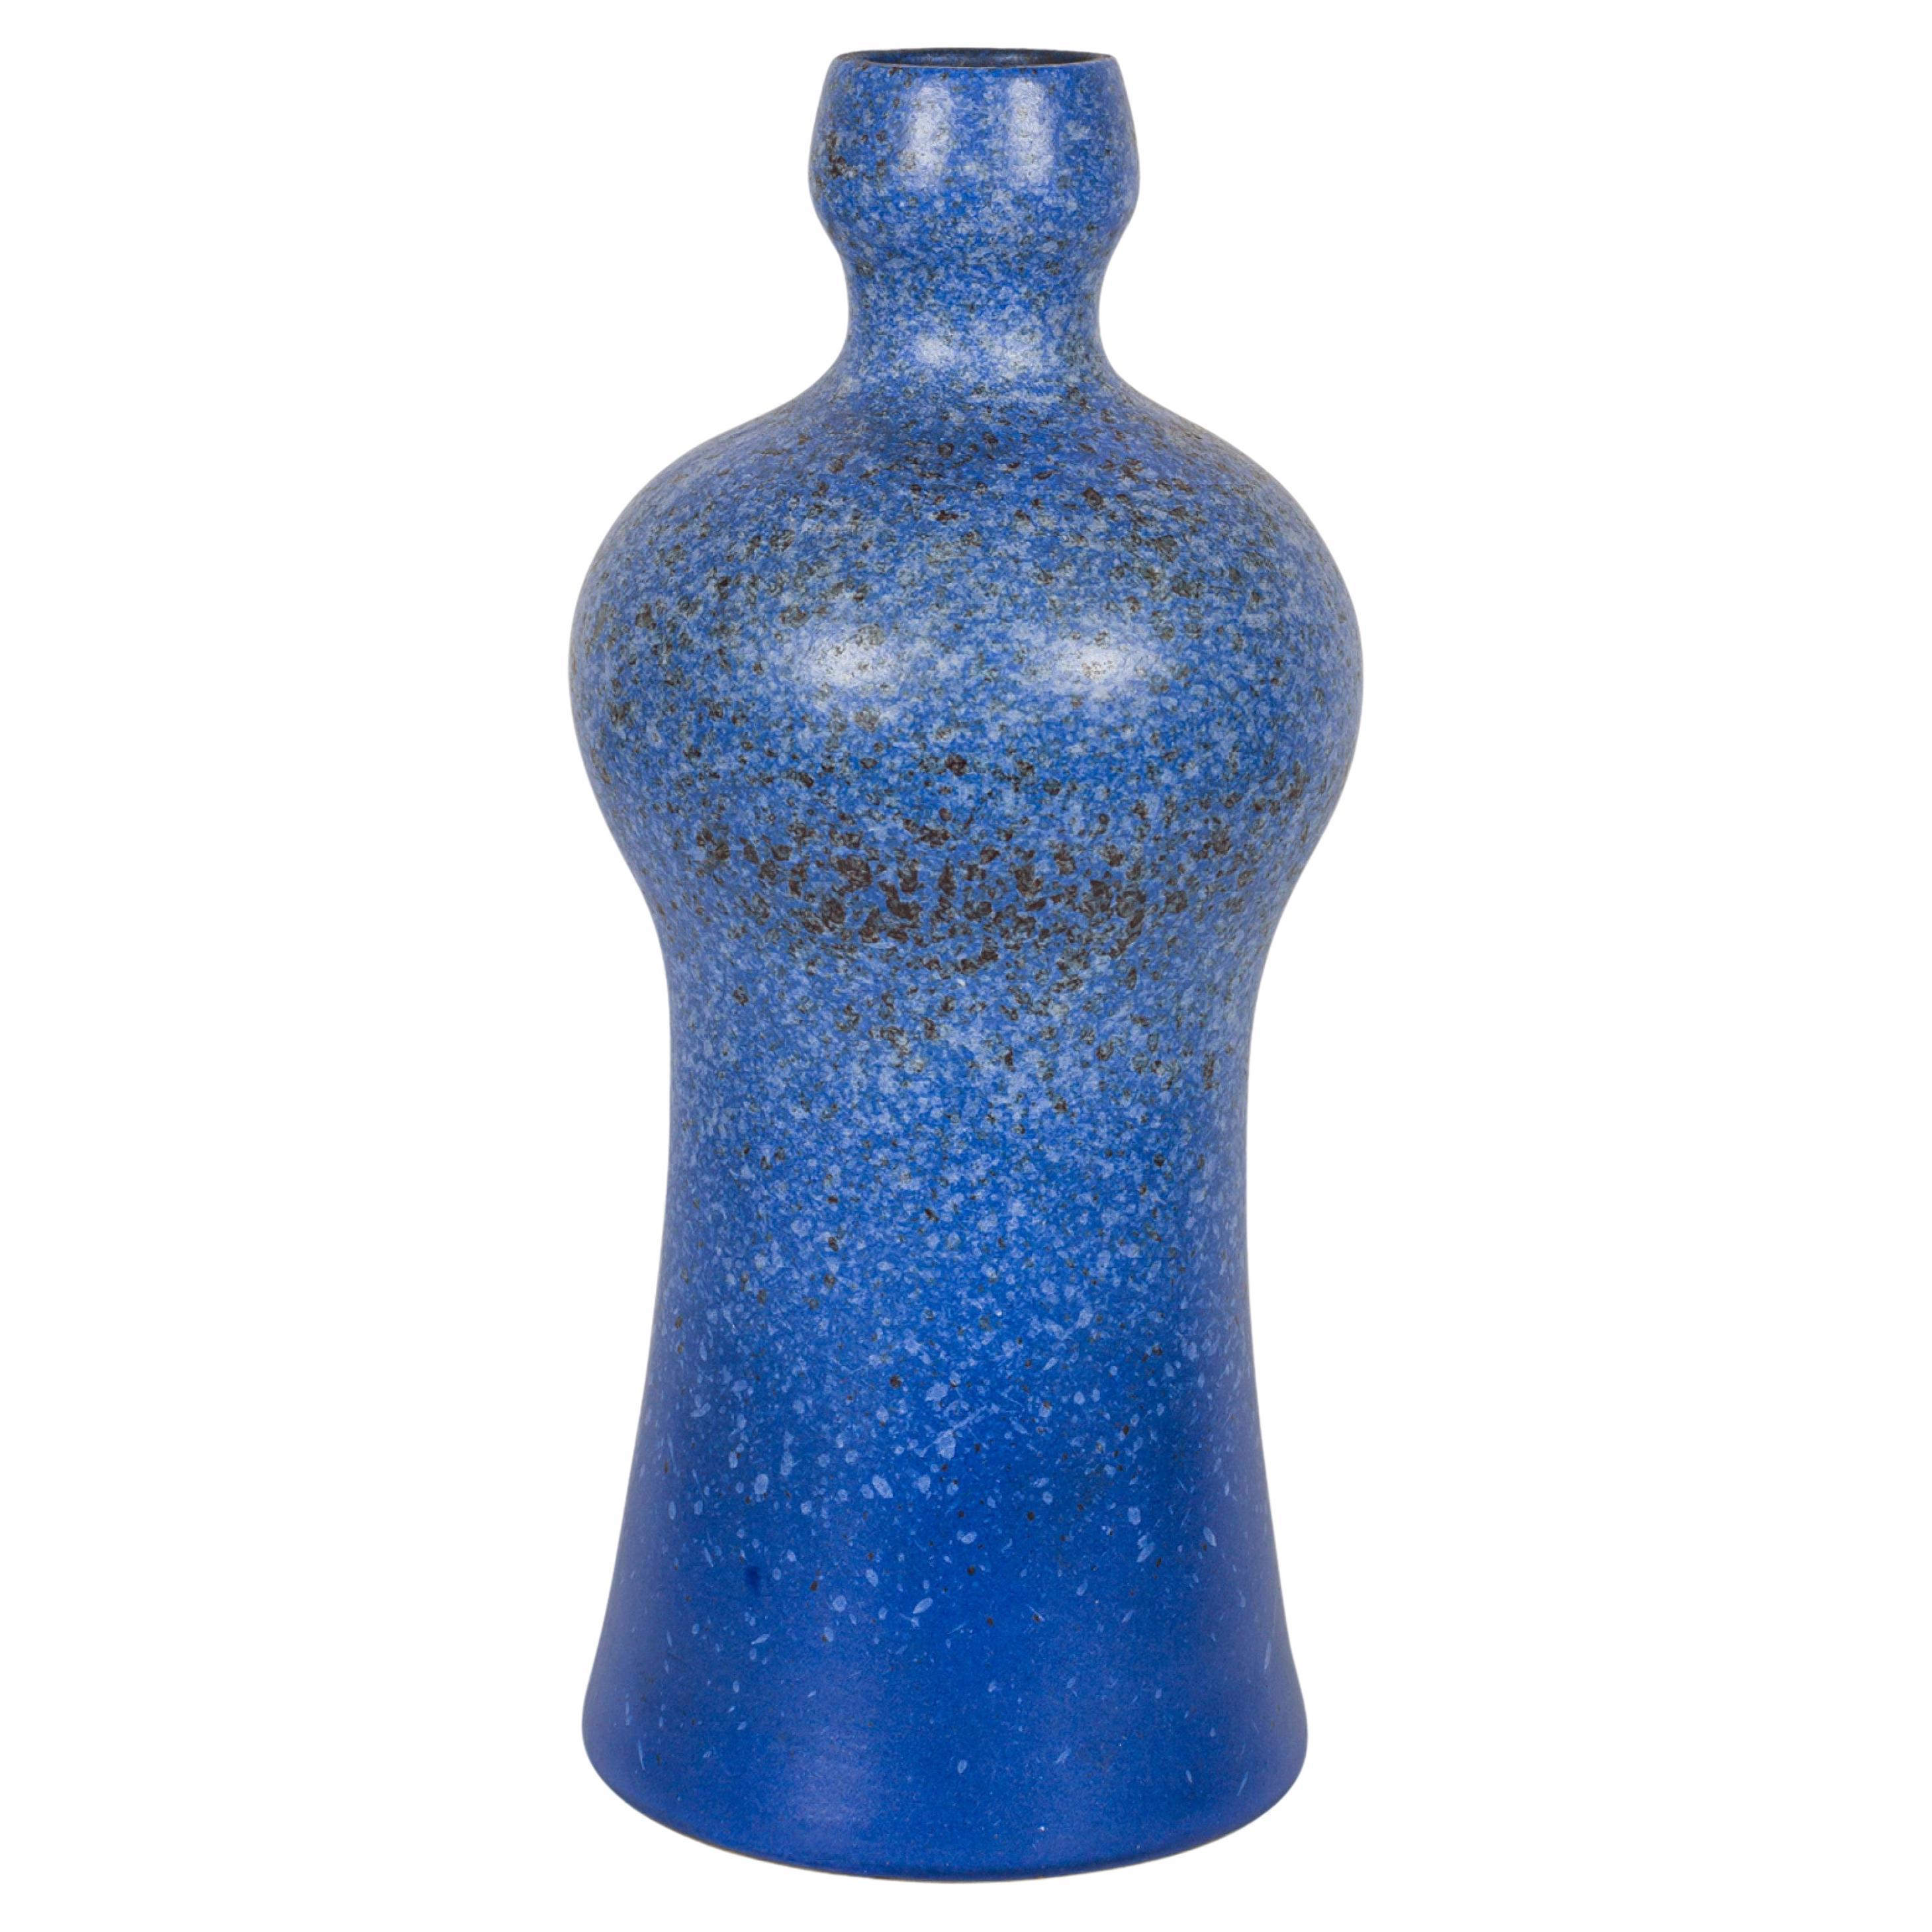 Strehla Keramik East German Mid-Century Speckled Blue Glazed Ceramic Bottle Vase